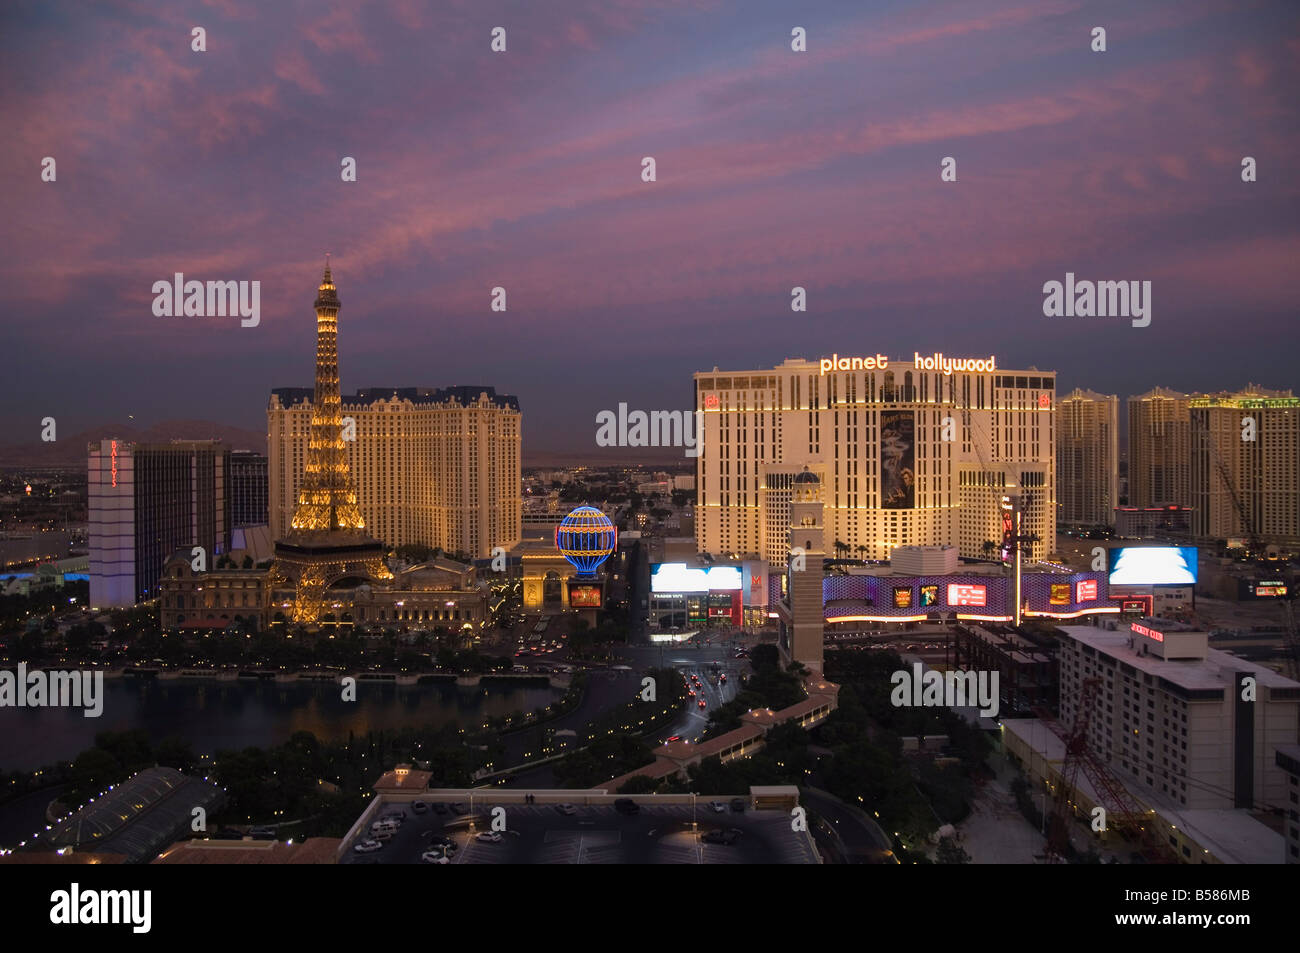 Paris Hotel and others on the Strip (Las Vegas Boulevard) near Flamingo, Las Vegas, Nevada, United States of America Stock Photo